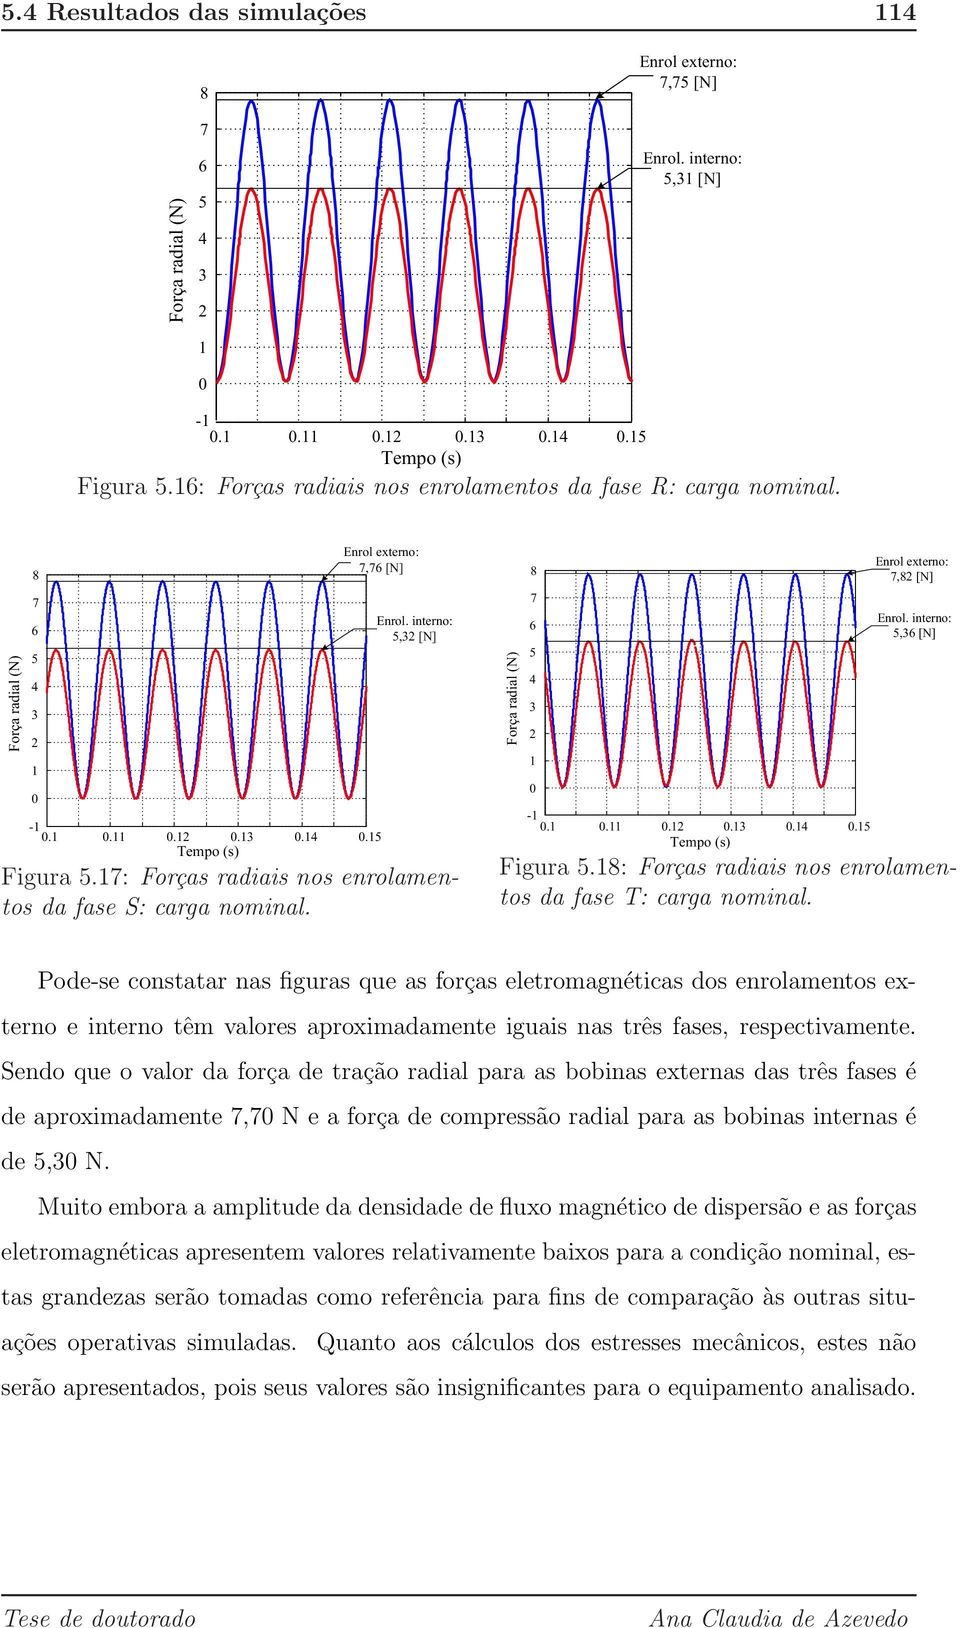 17: Forças radiais nos enrolamentos da fase S: carga nominal. Força radial (N) 8 7 6 5 4 3 2 1 0-1 0.1 0.11 0.12 0.13 0.14 0.15 Tempo (s) Enrol externo: 7,82 [N] Enrol. interno: 5,36 [N] Figura 5.